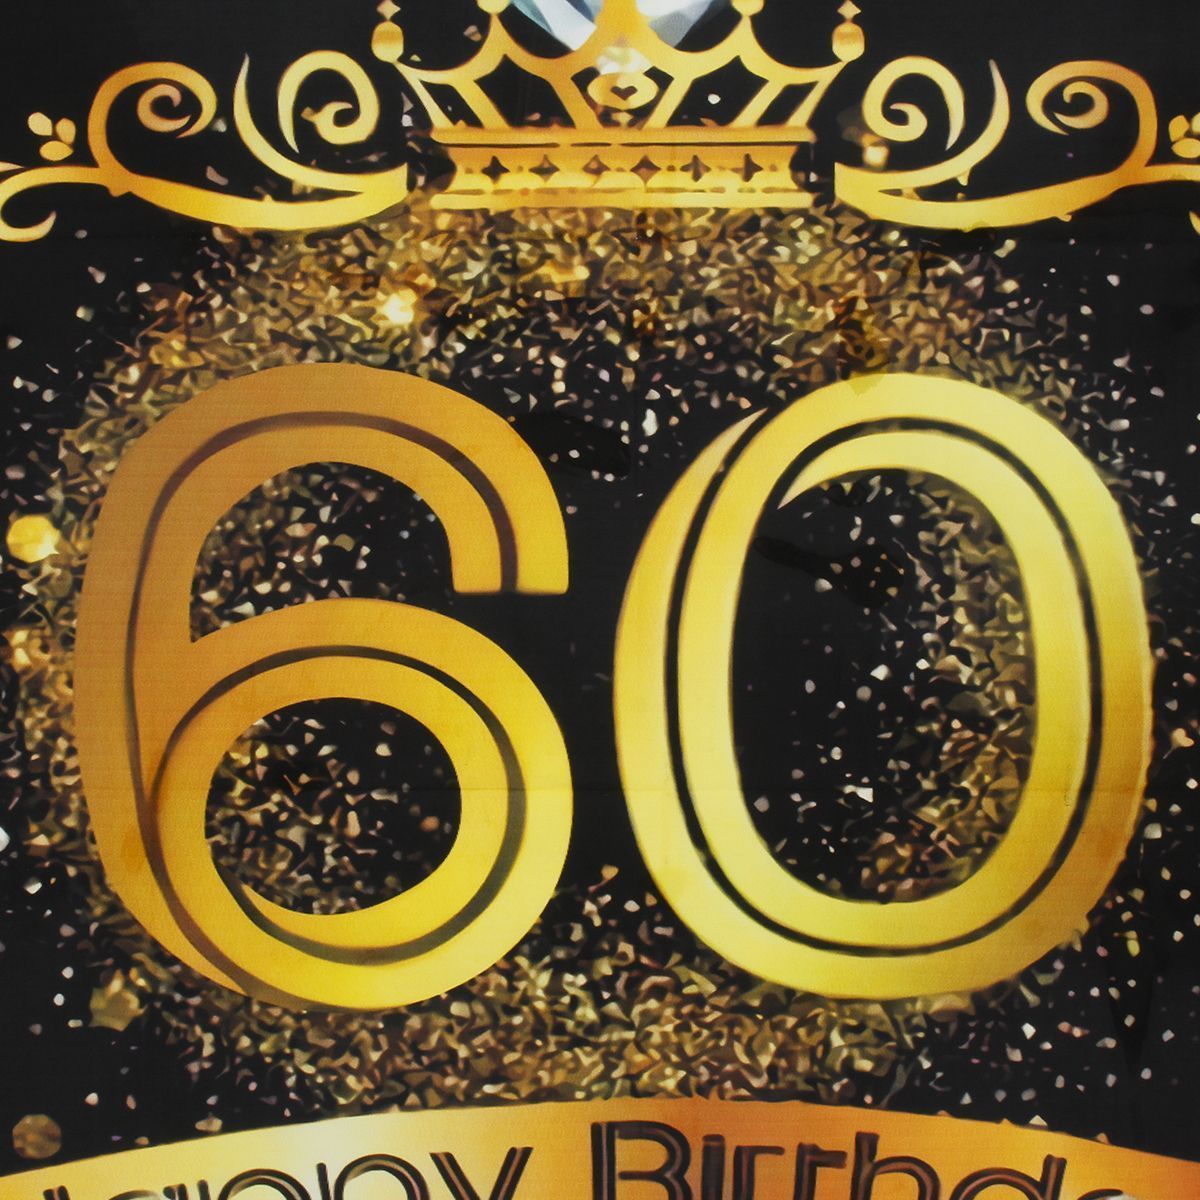 5x7FT-Vinyl-60th-Happy-Birthday-Balloon-Diamond-Crown-Photography-Backdrop-Background-Studio-Prop-1638959